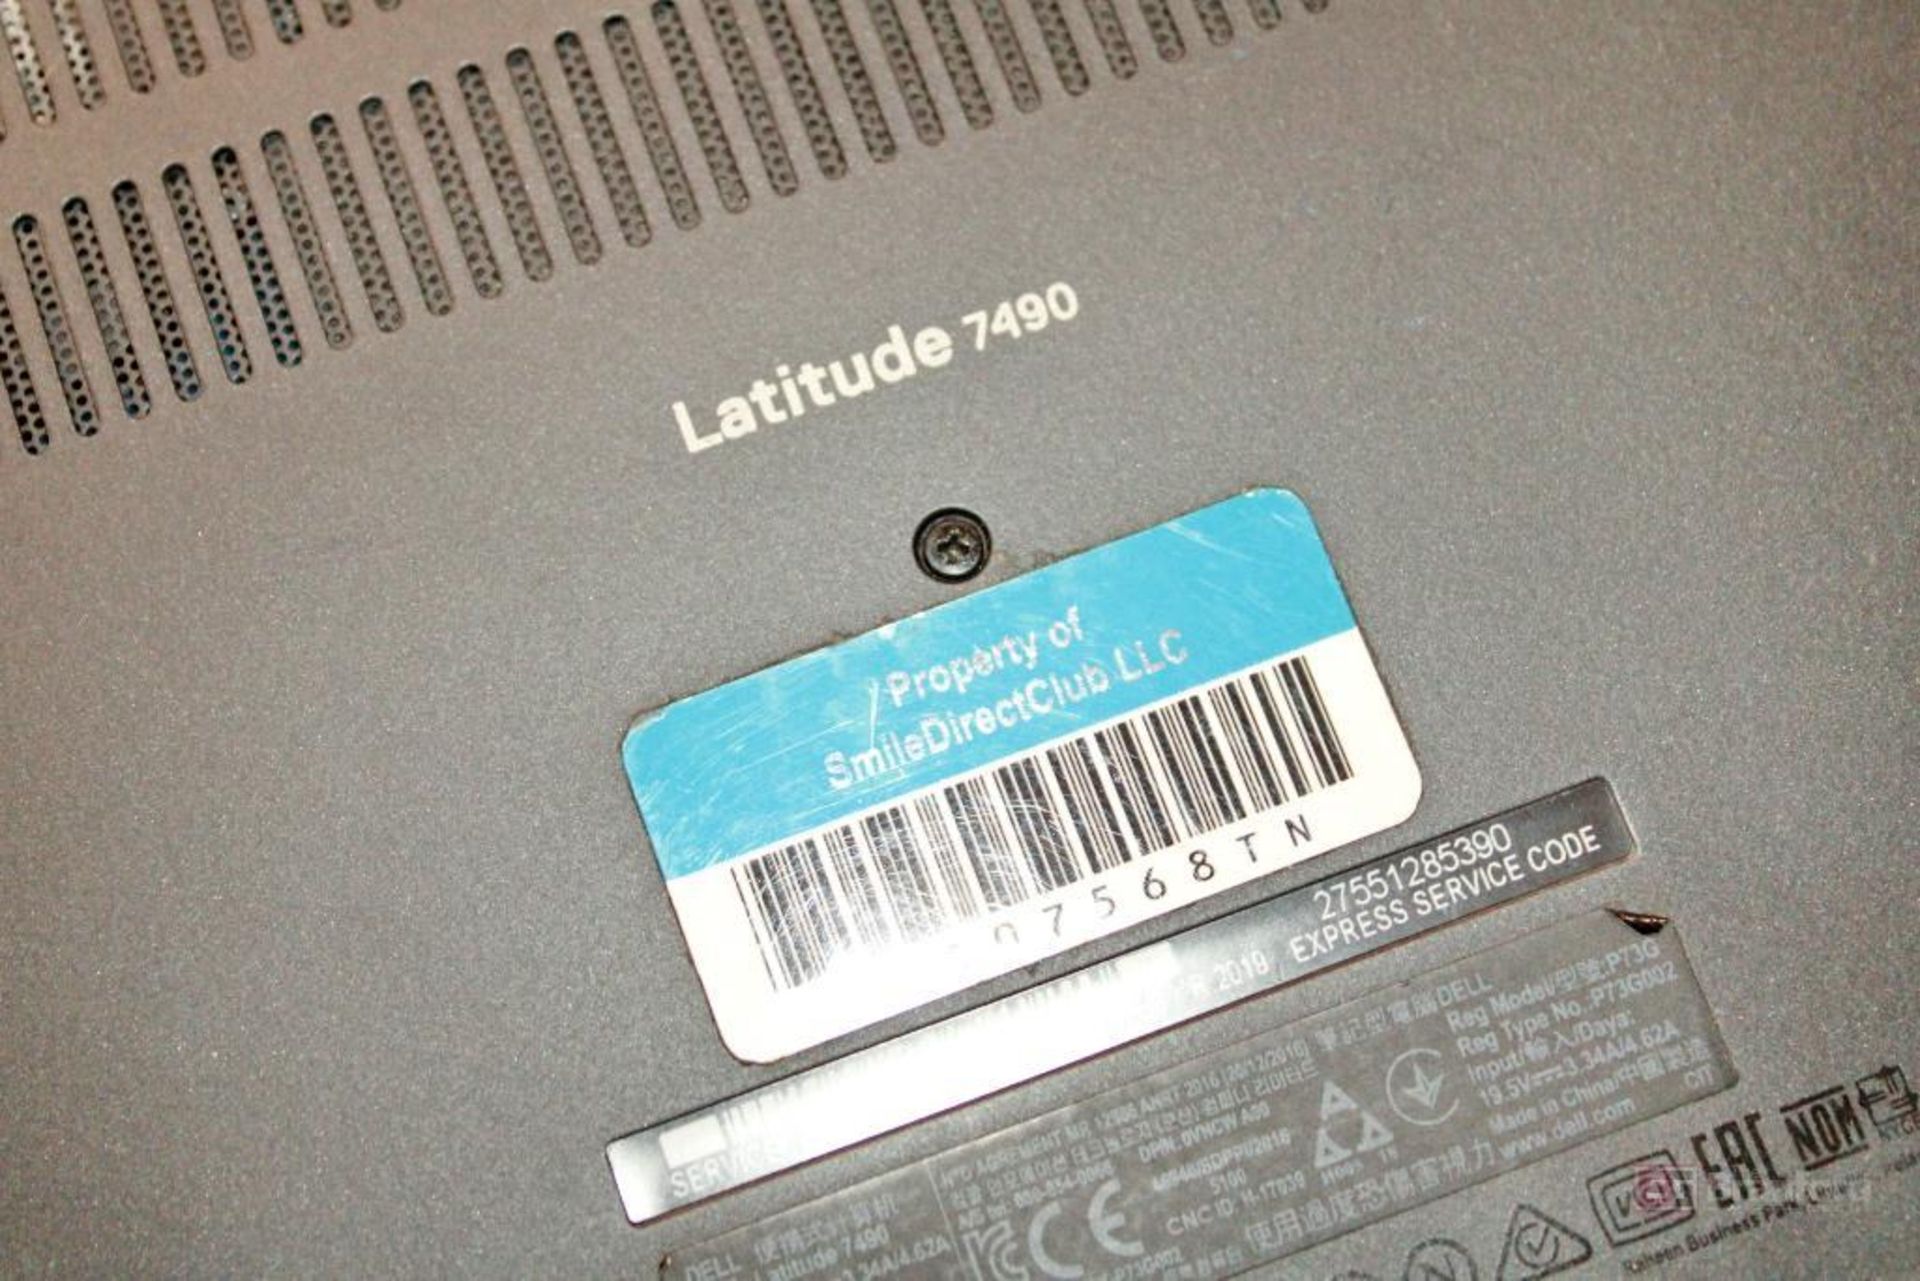 (4) DELL Laptops Model Latitude 7490 - Image 3 of 3